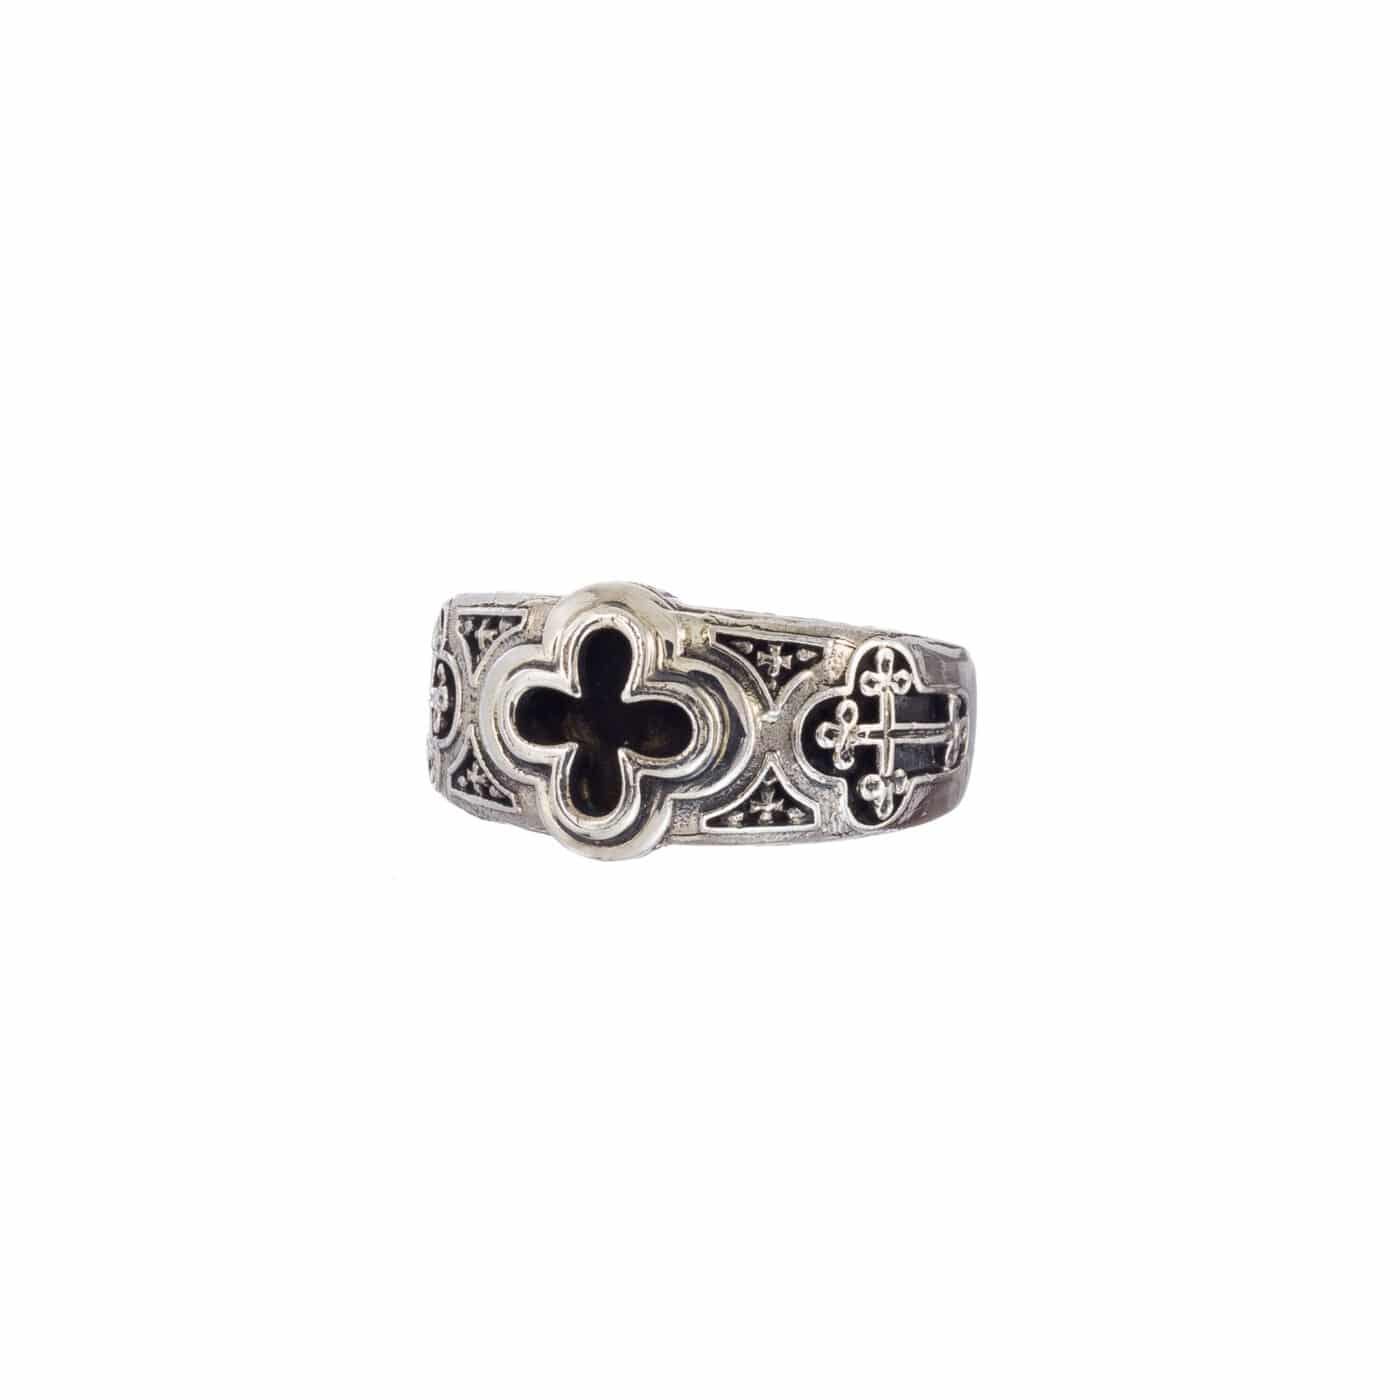 Odysseus Ring in Sterling Silver 2975 b